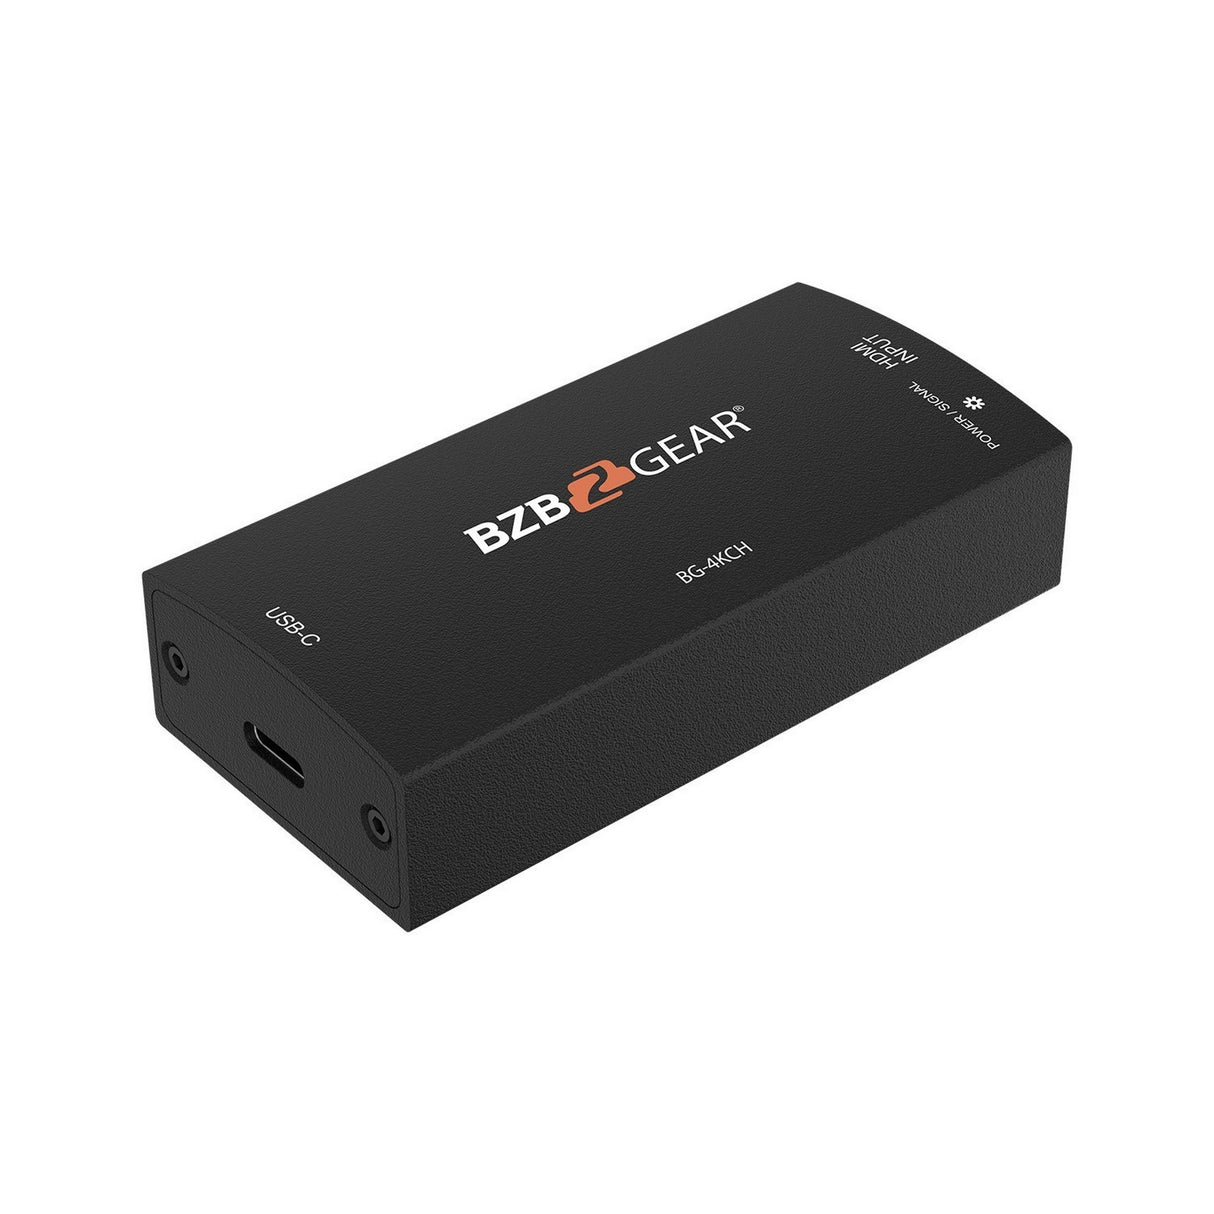 BZBGEAR BG-4KCH USB-C Video Capture Box with Scaler